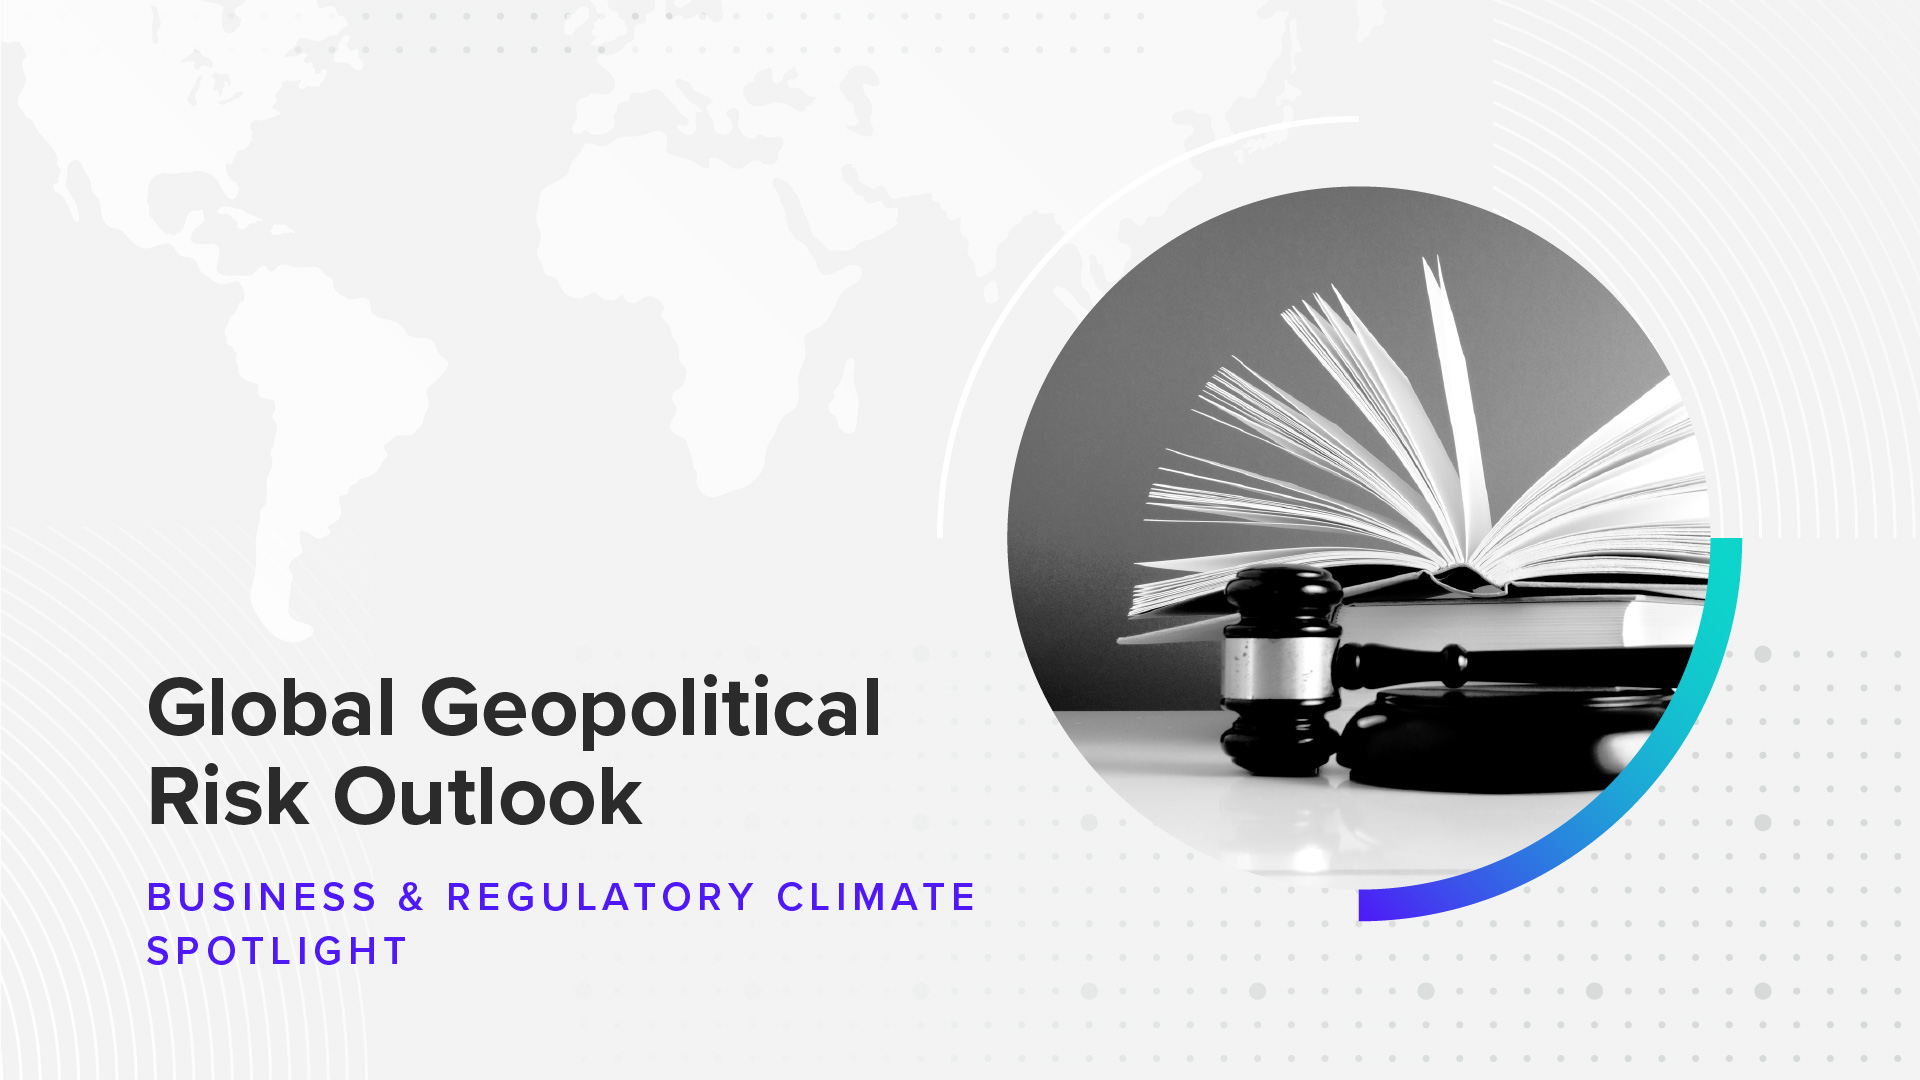 Global Geopolitical Risk Outlook: Business & Regulatory Climate Spotlight